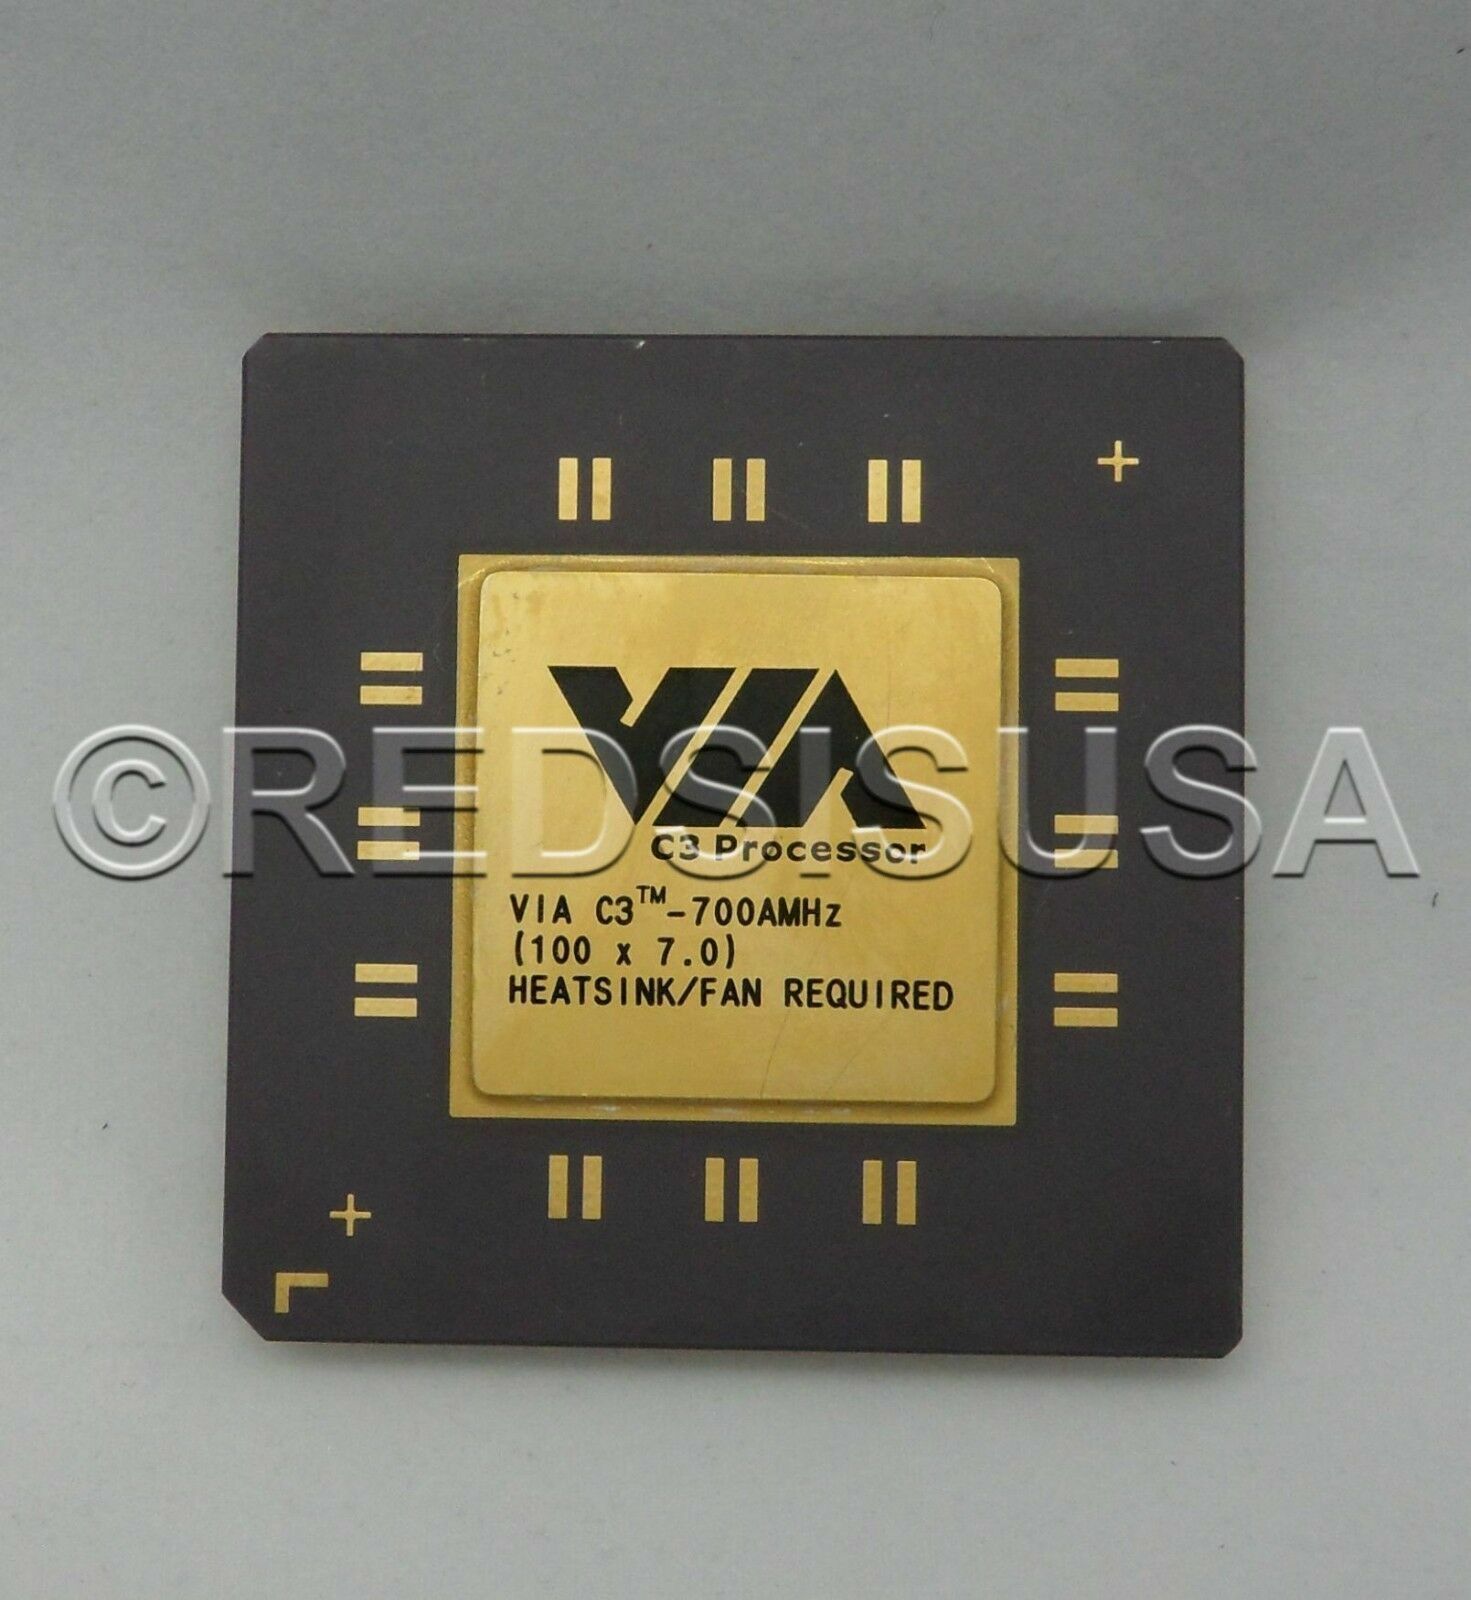 VIA C3 700 MHZ Processor CYRIX III-866 Grade B VIAC3-700AMHZ